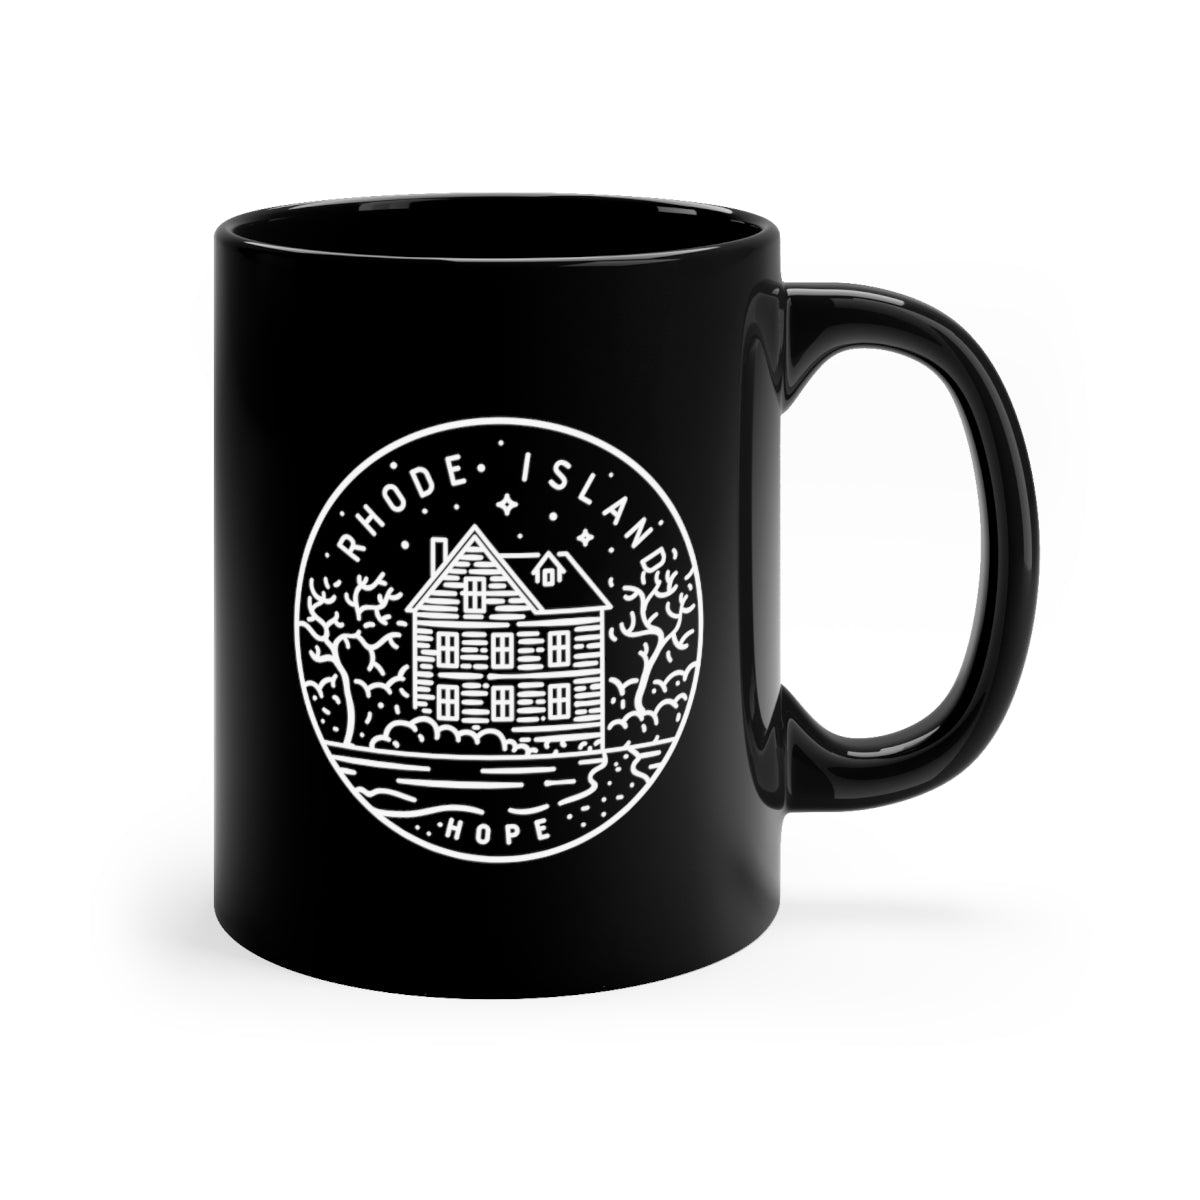 State of Rhode Island Ceramic Mug - The Northwest Store